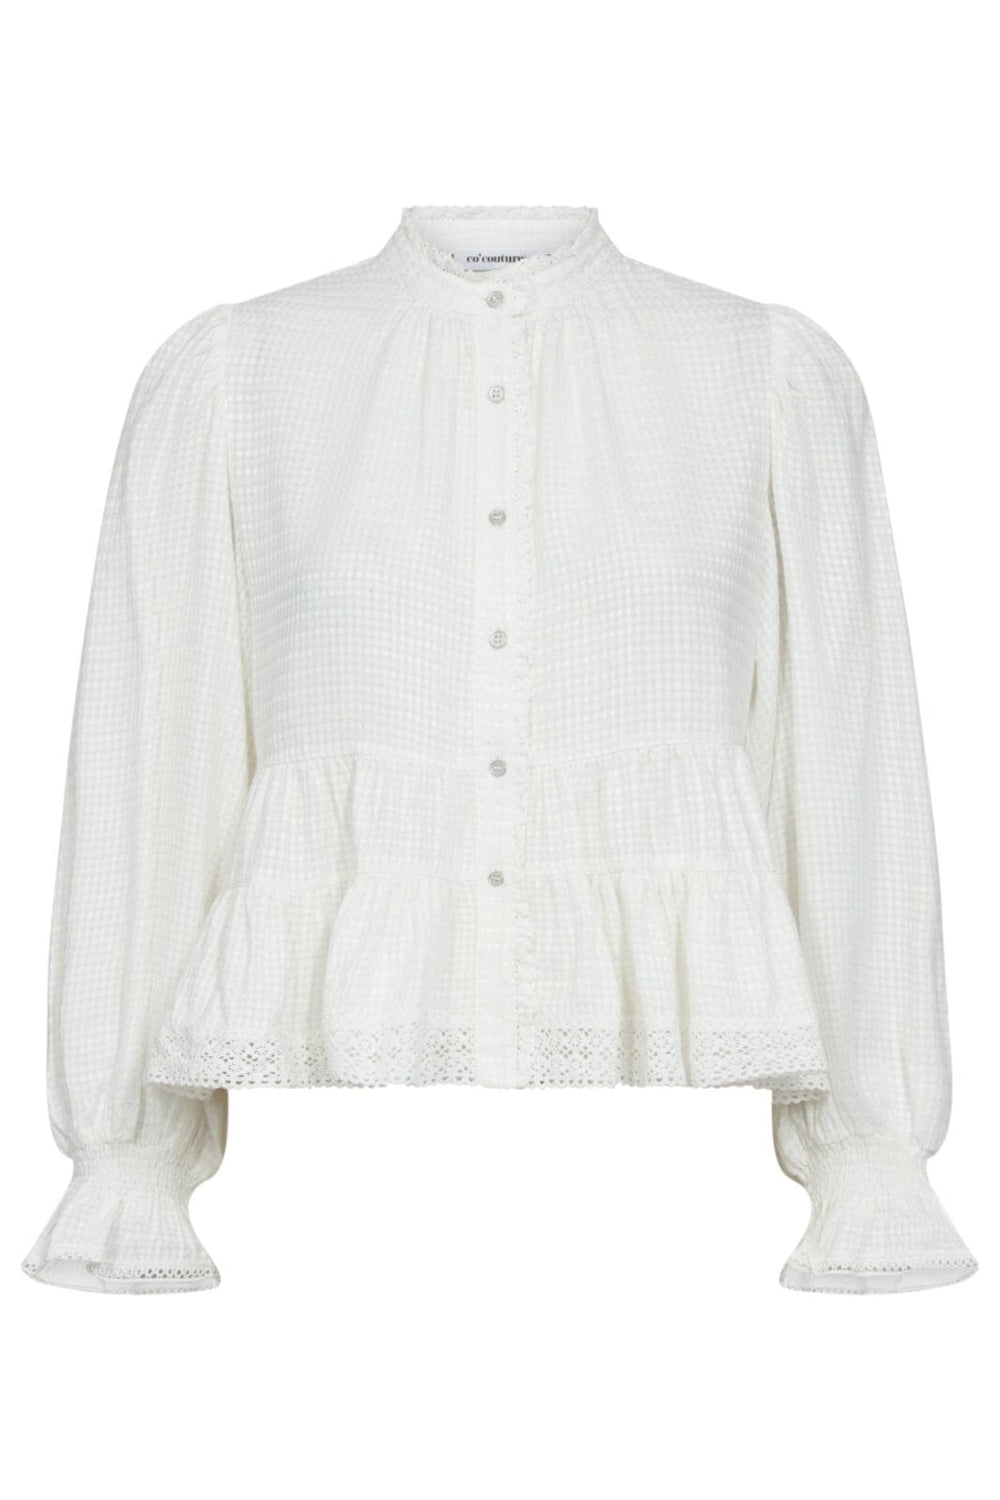 Co´couture - Mirkacc Shirt 35542 - 4000 White Skjorter 